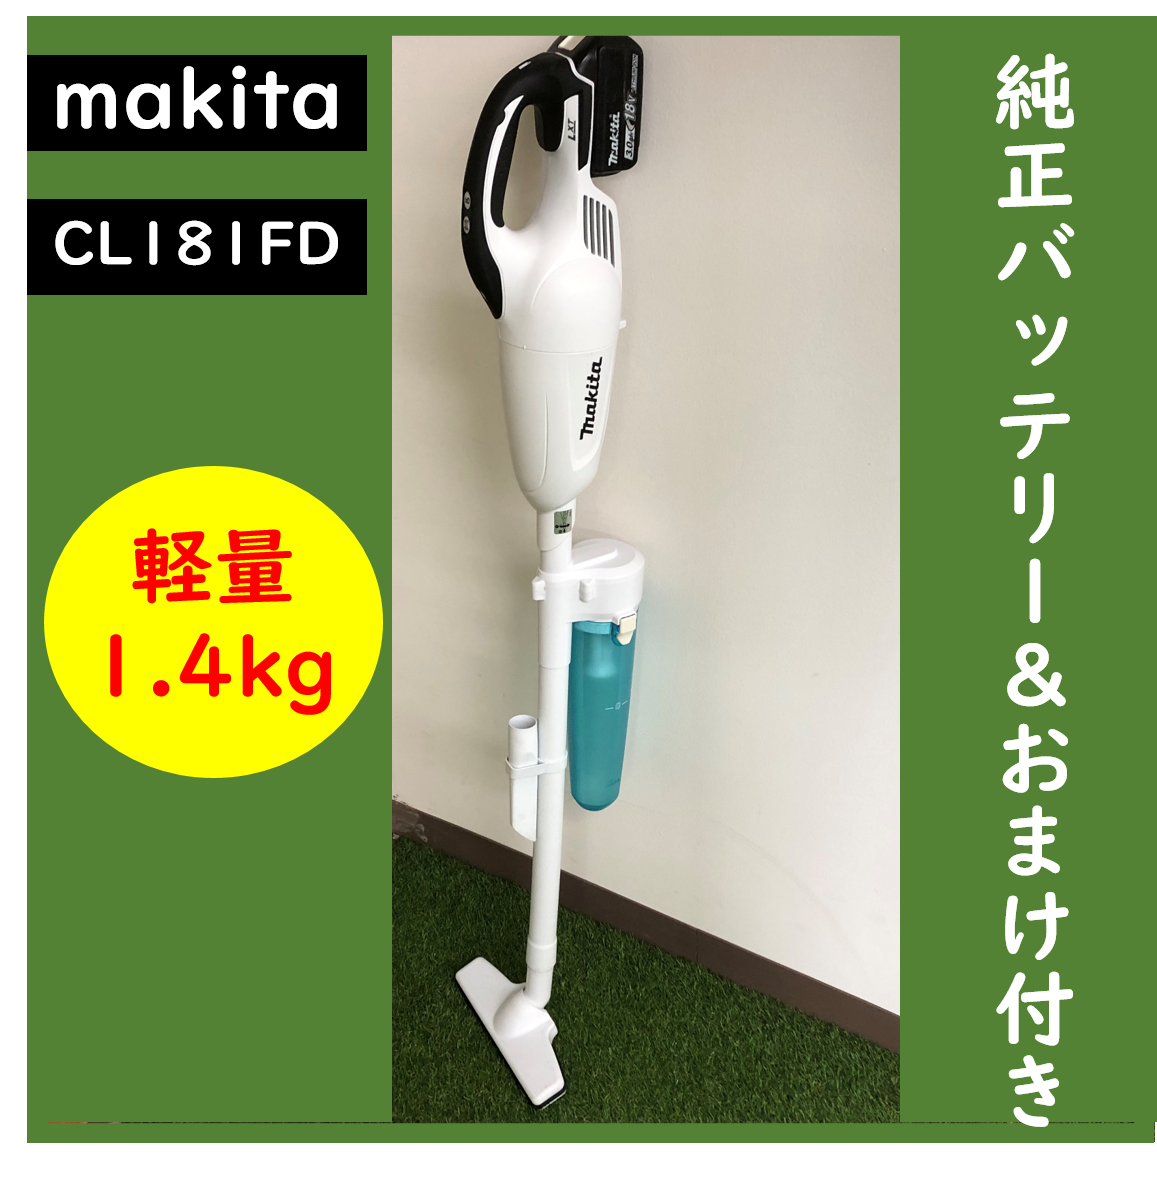  makita マキタ 充電式コードレスクリーナ CL181FD 掃除機